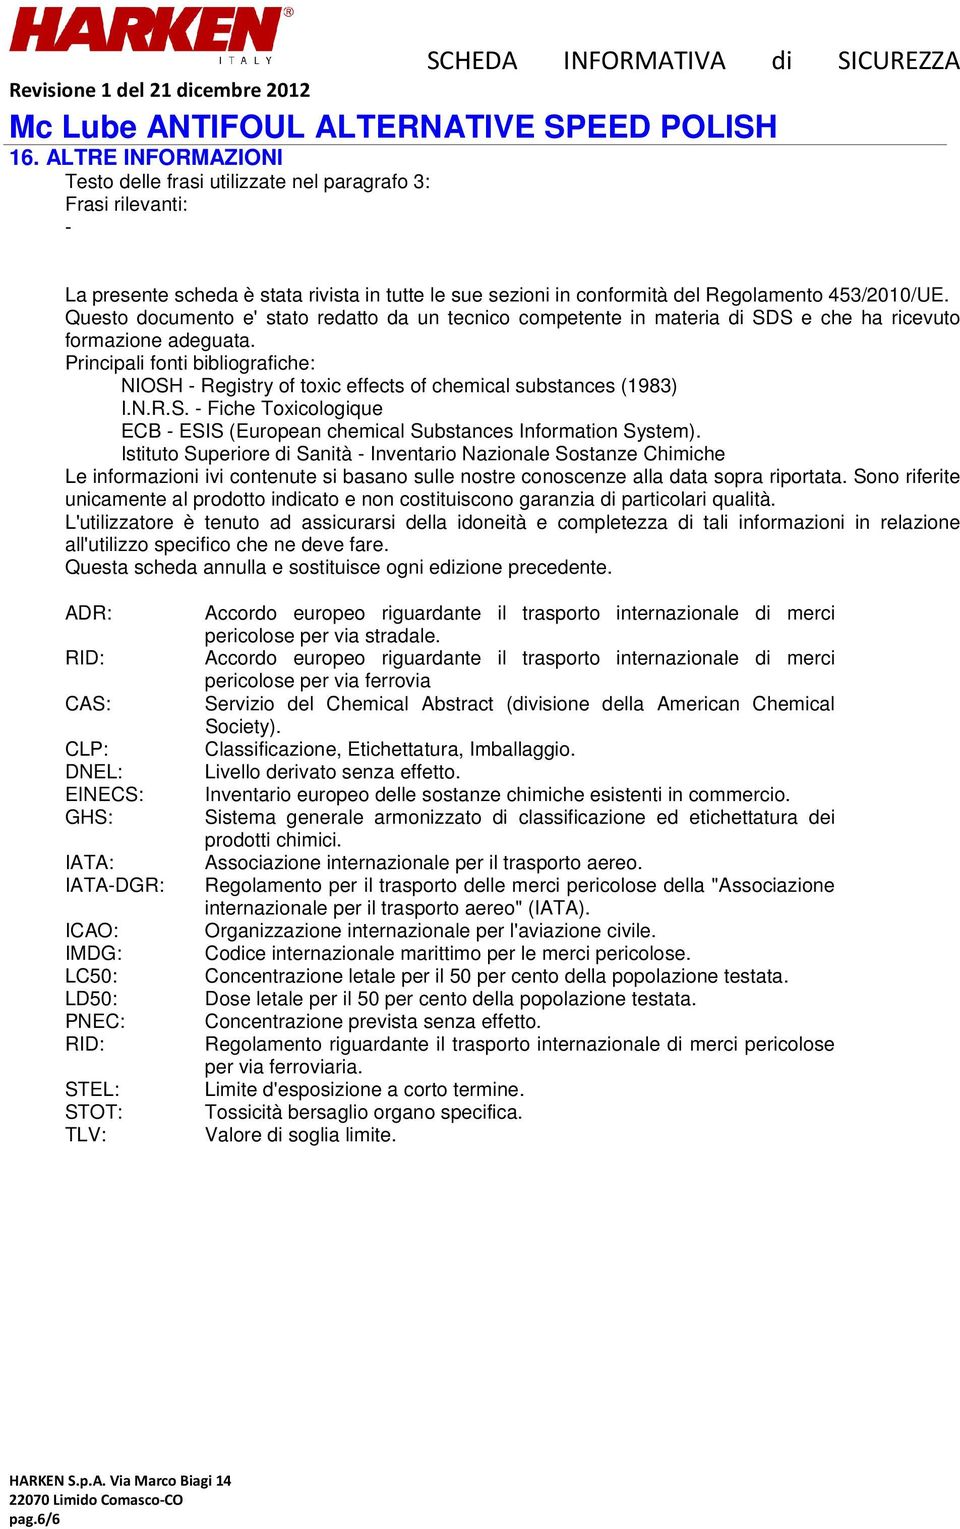 Principali fonti bibliografiche: NIOSH - Registry of toxic effects of chemical substances (1983) I.N.R.S. - Fiche Toxicologique ECB - ESIS (European chemical Substances Information System).